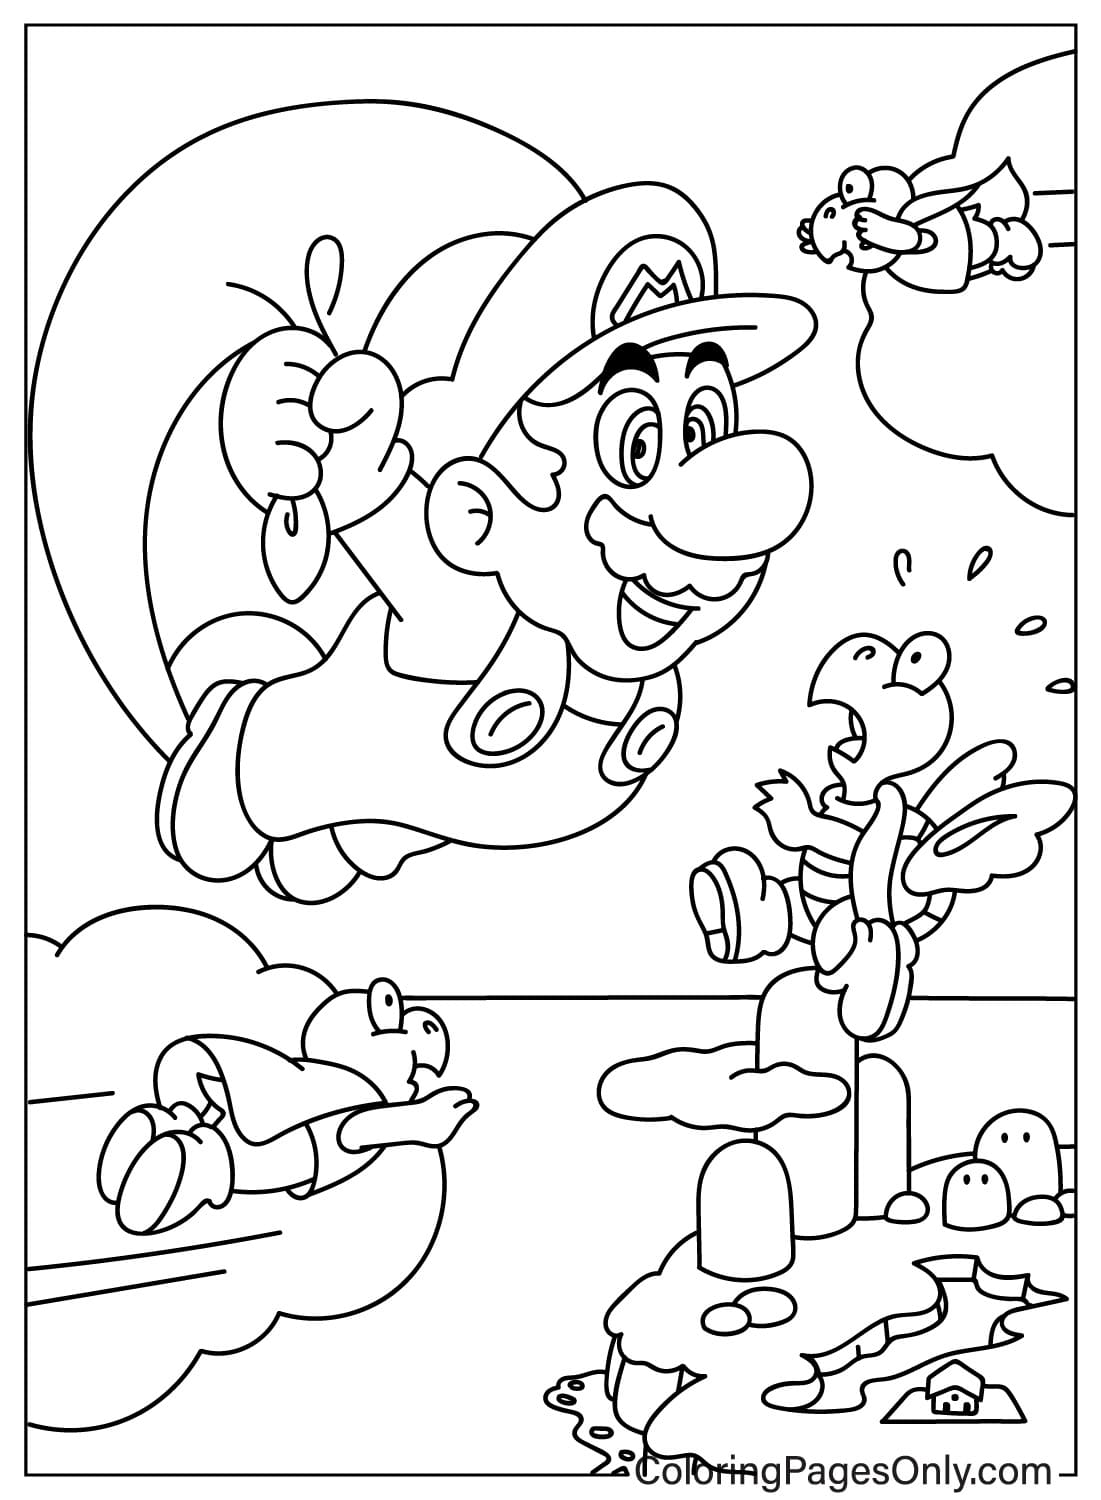 Mario and Koopa Troopa Coloring Page